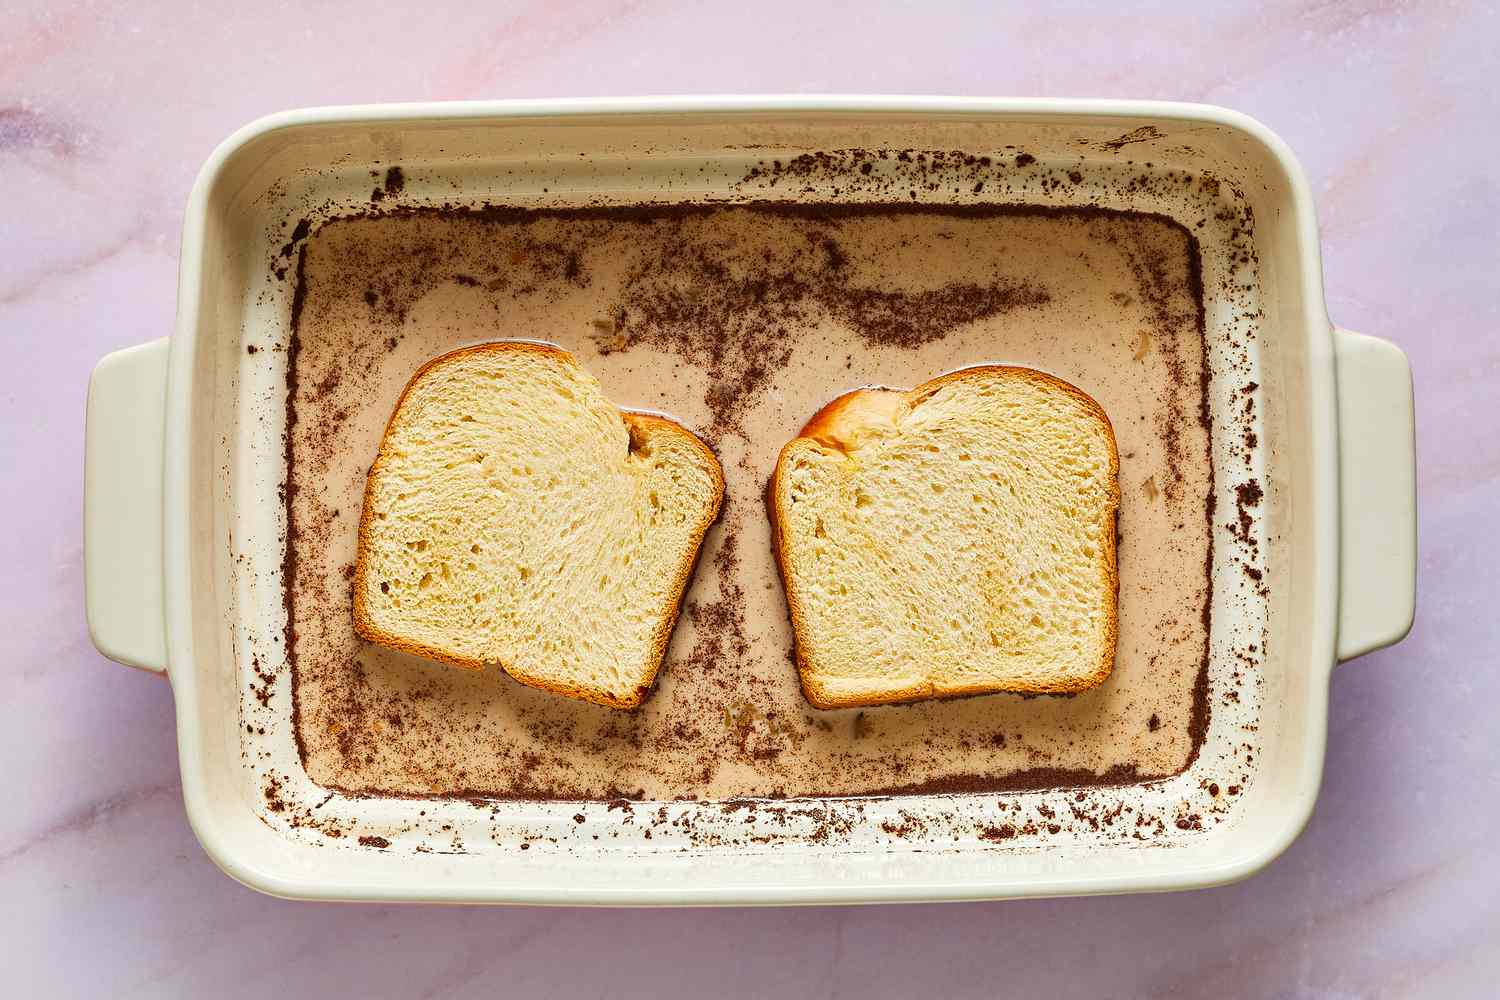 Two slices of bread soaking in custard